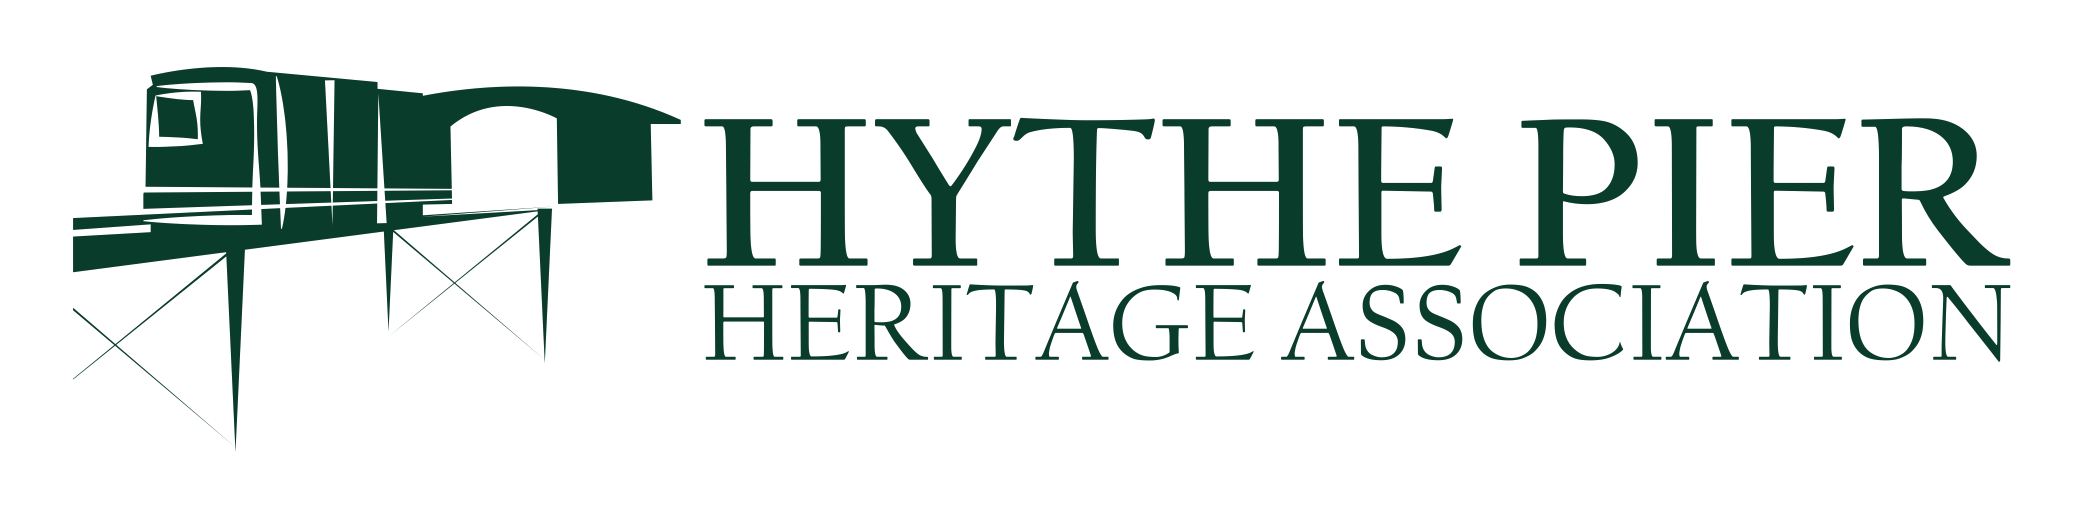 Hythe Pier Heritage Association